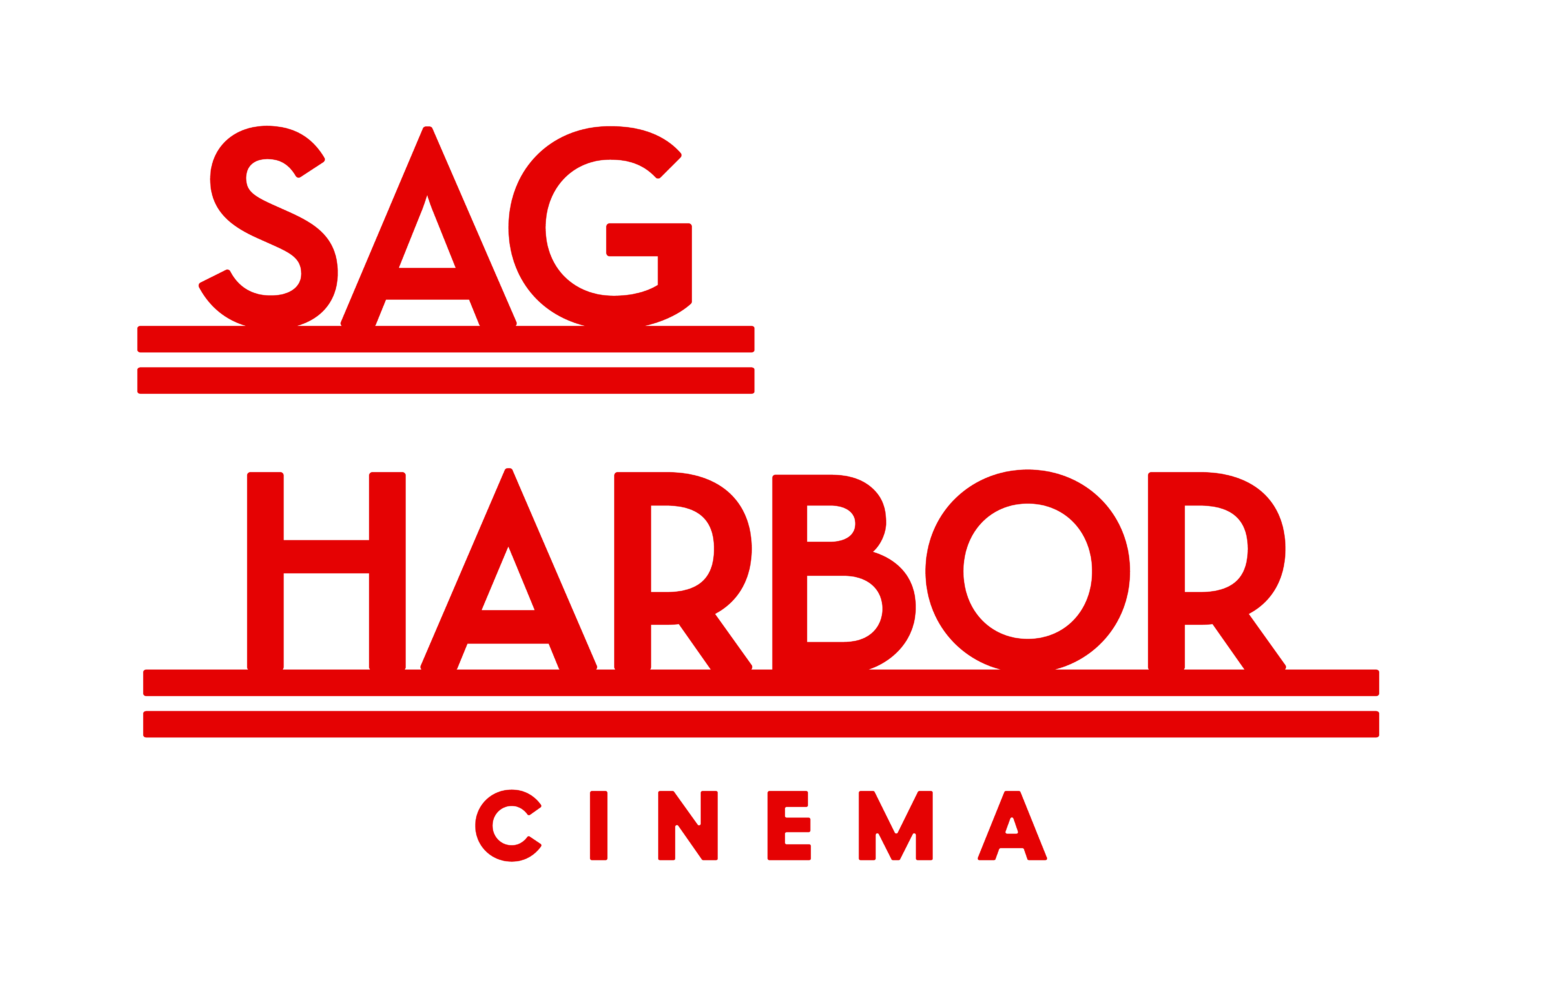 4/21 Earth Day Program At Sag Harbor Cinema